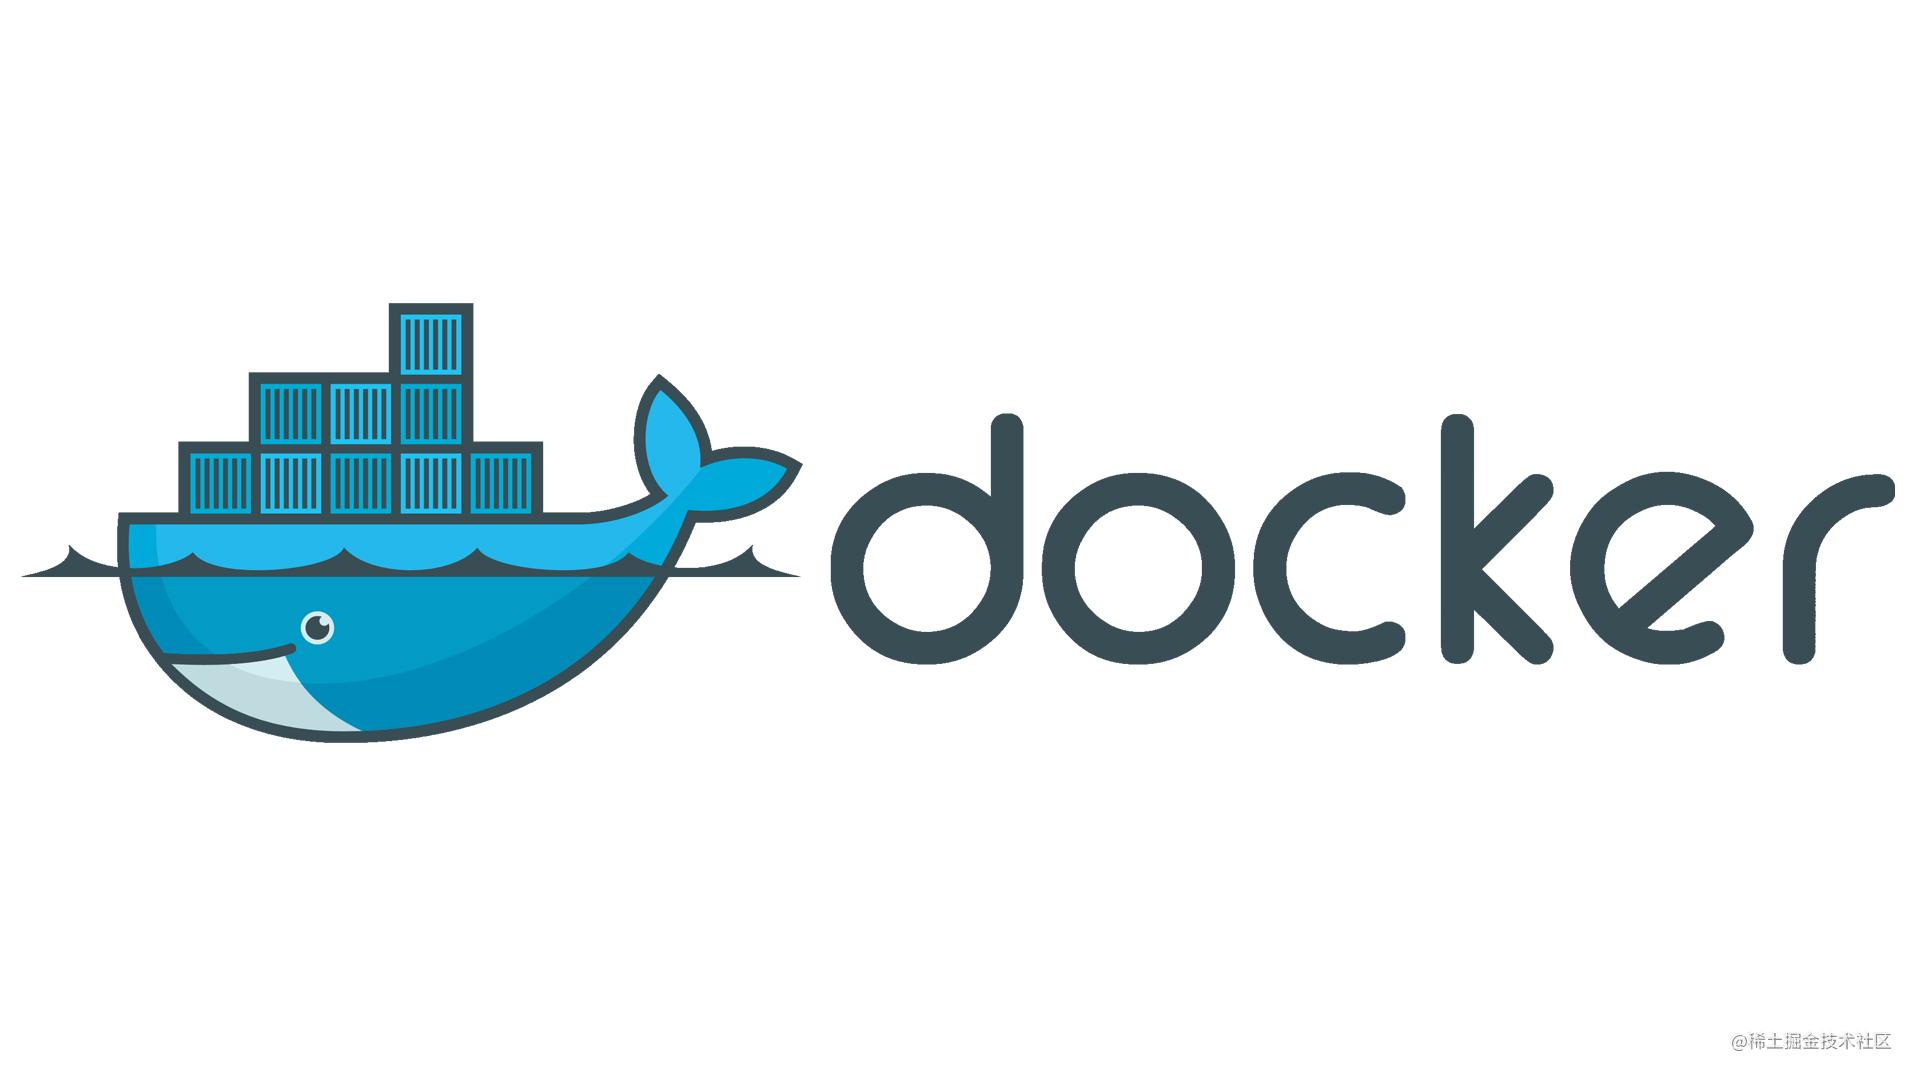 Logo-Docker